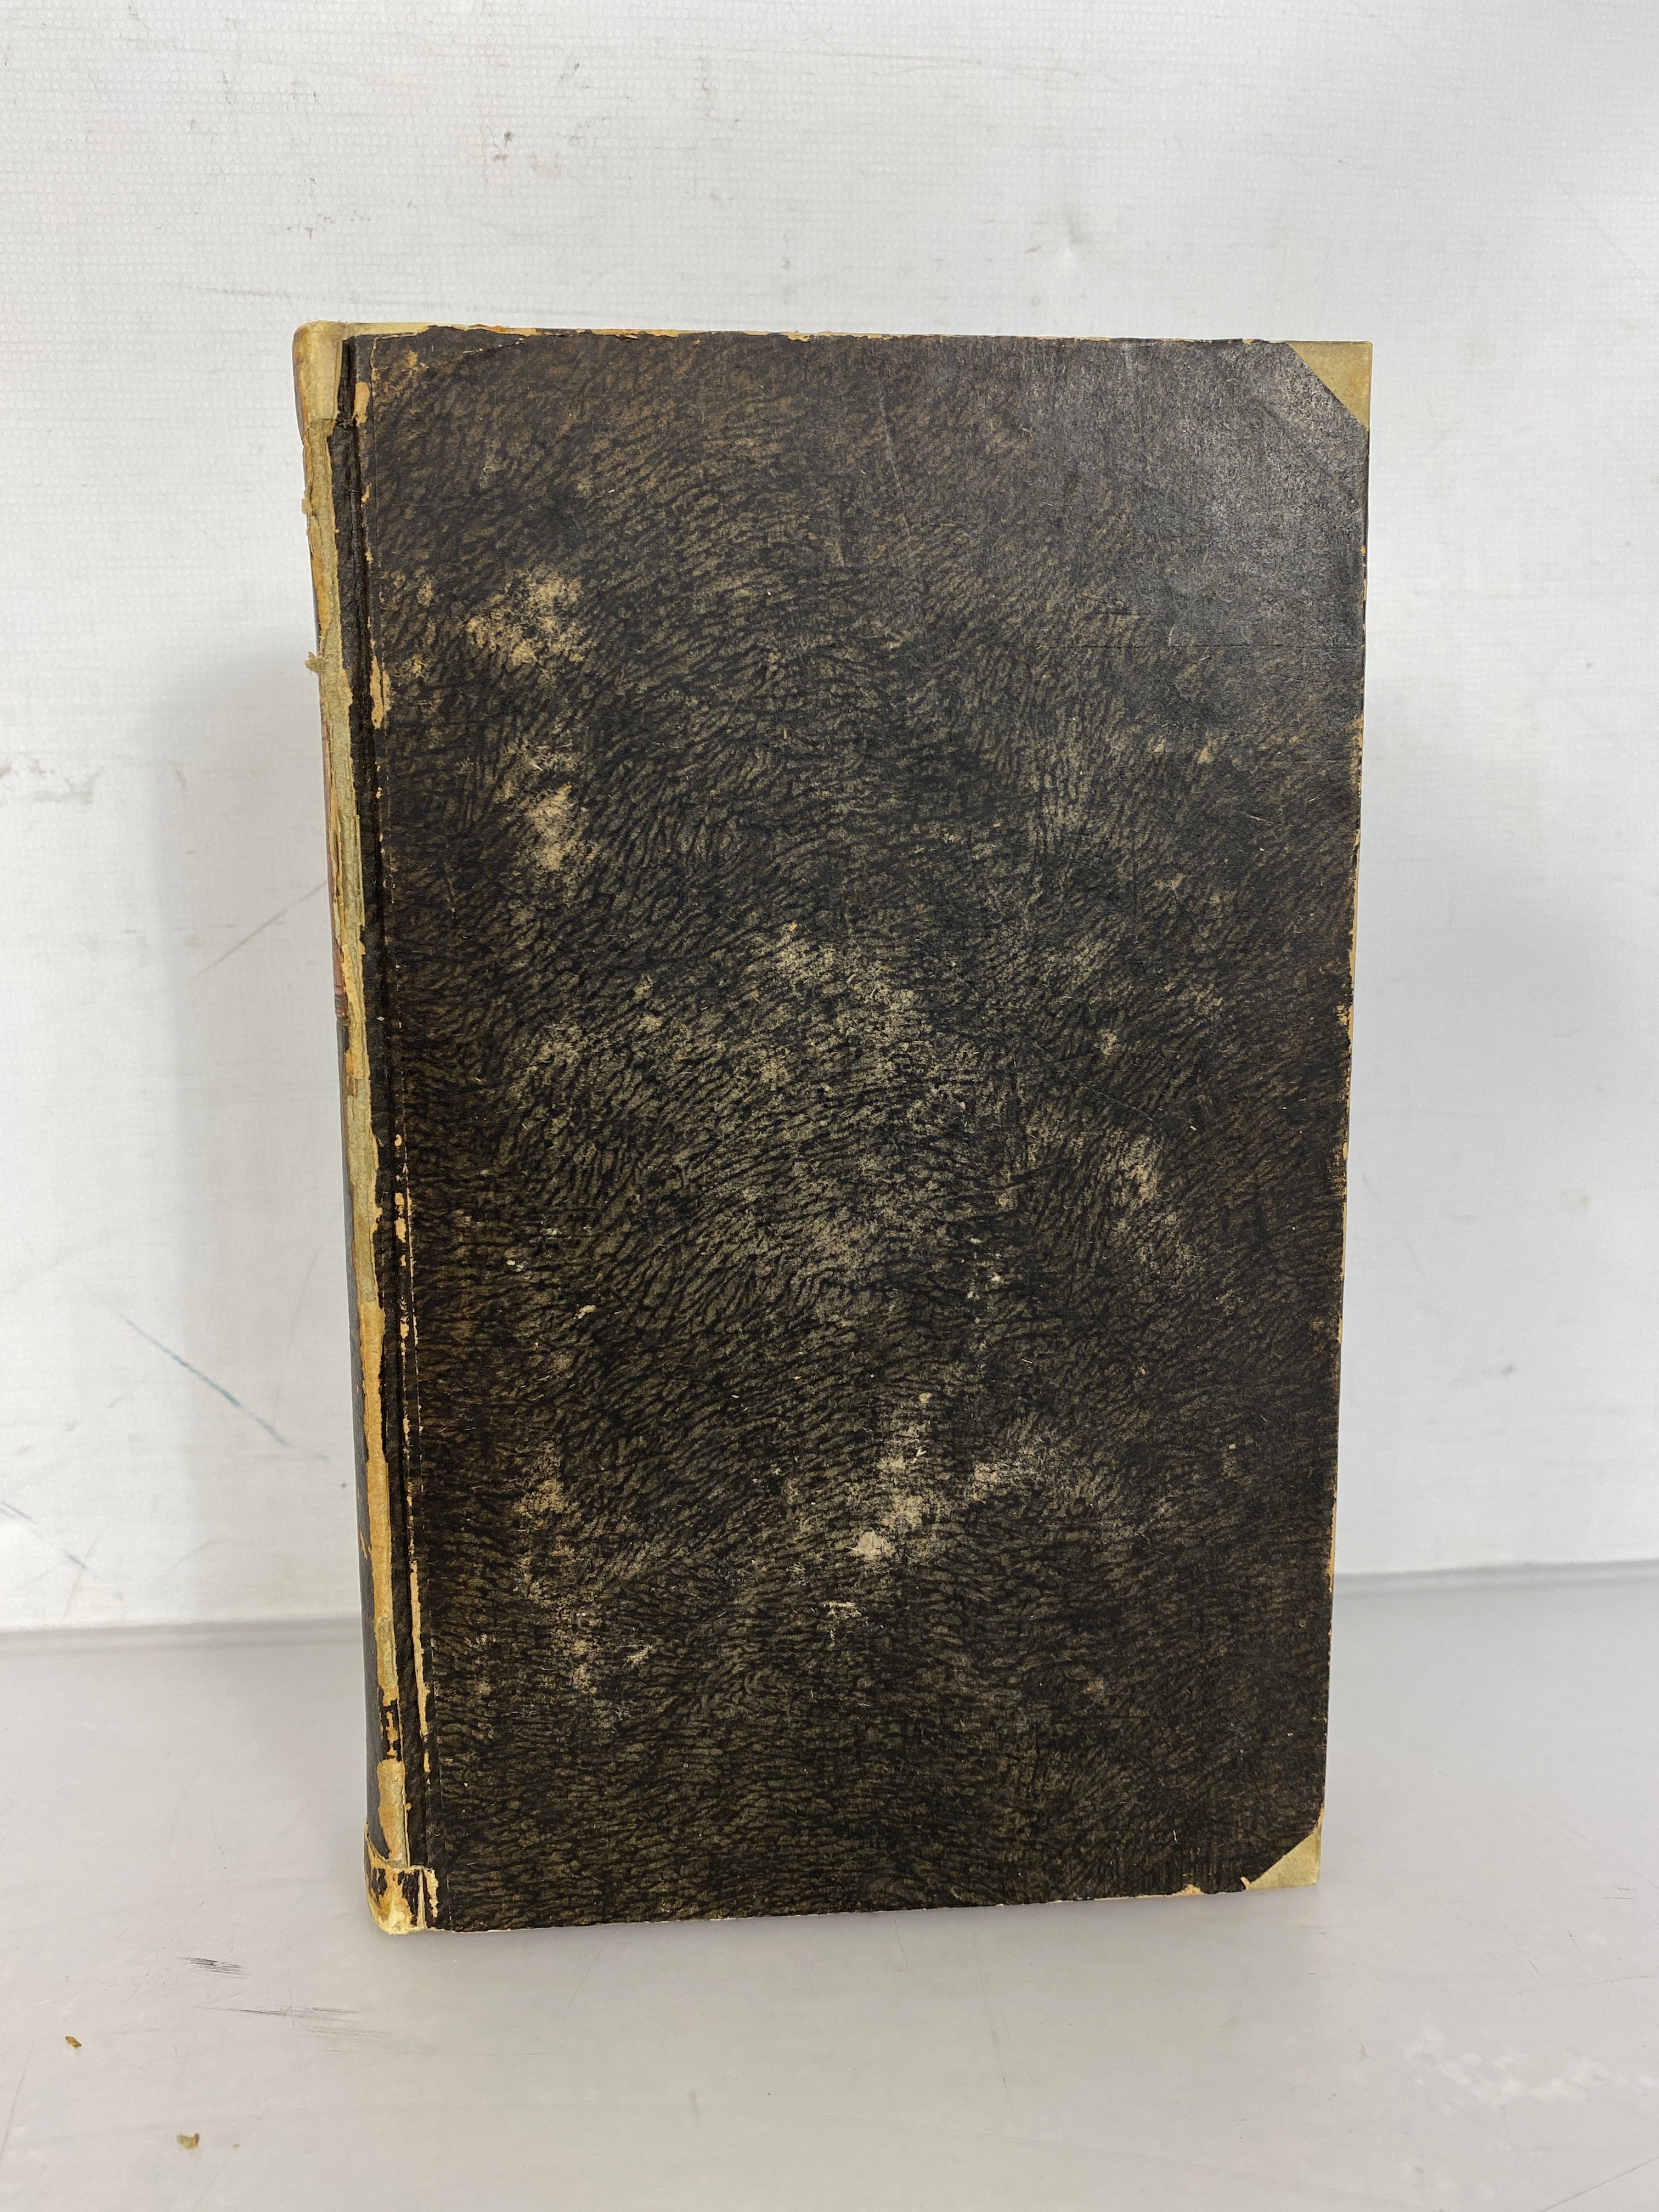 2 Antique Volumes of Christologie des Alten Testament (Christology of the Old Testament) by Hengstenberg 1832-1835 HC